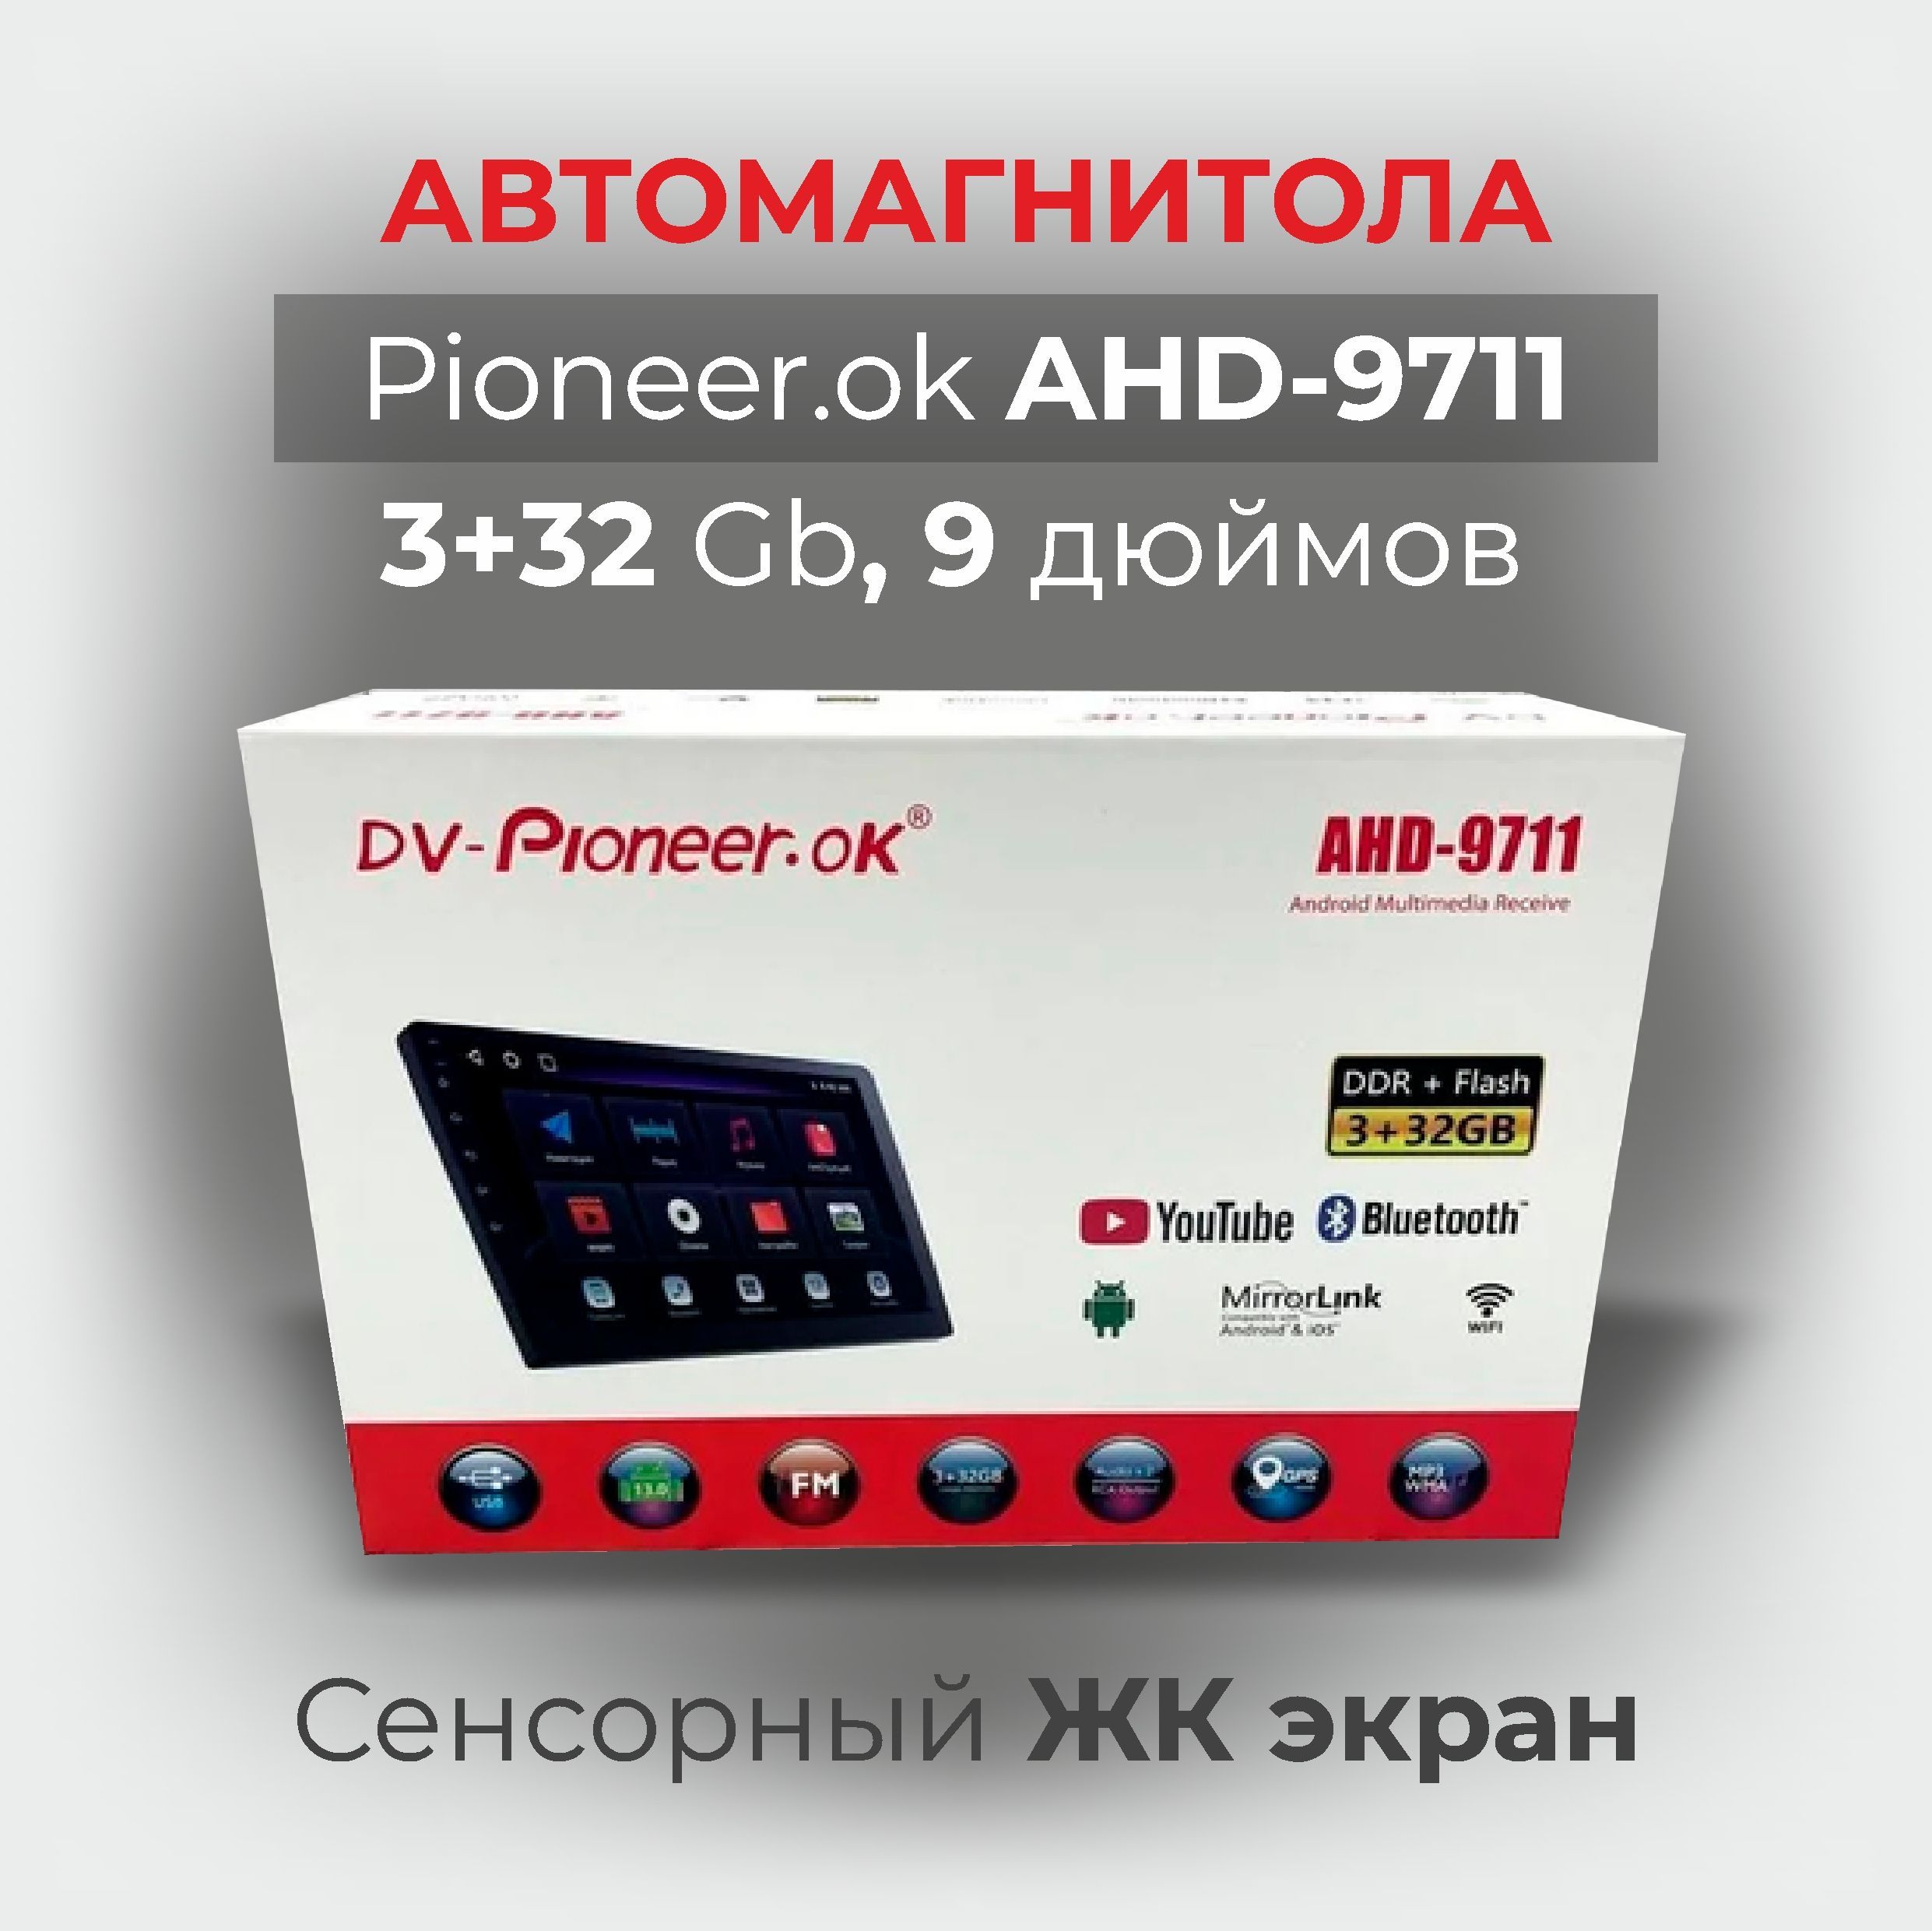 Pioneer ok ahd. DV Pioneer ok AHD 923 9 Размеры. DV Pioneer ok AHD 1099-10 подключение. Подключение DV Pioneer ok AHD-964. Схема подключения DV-Pioneer.ok AHD-779.